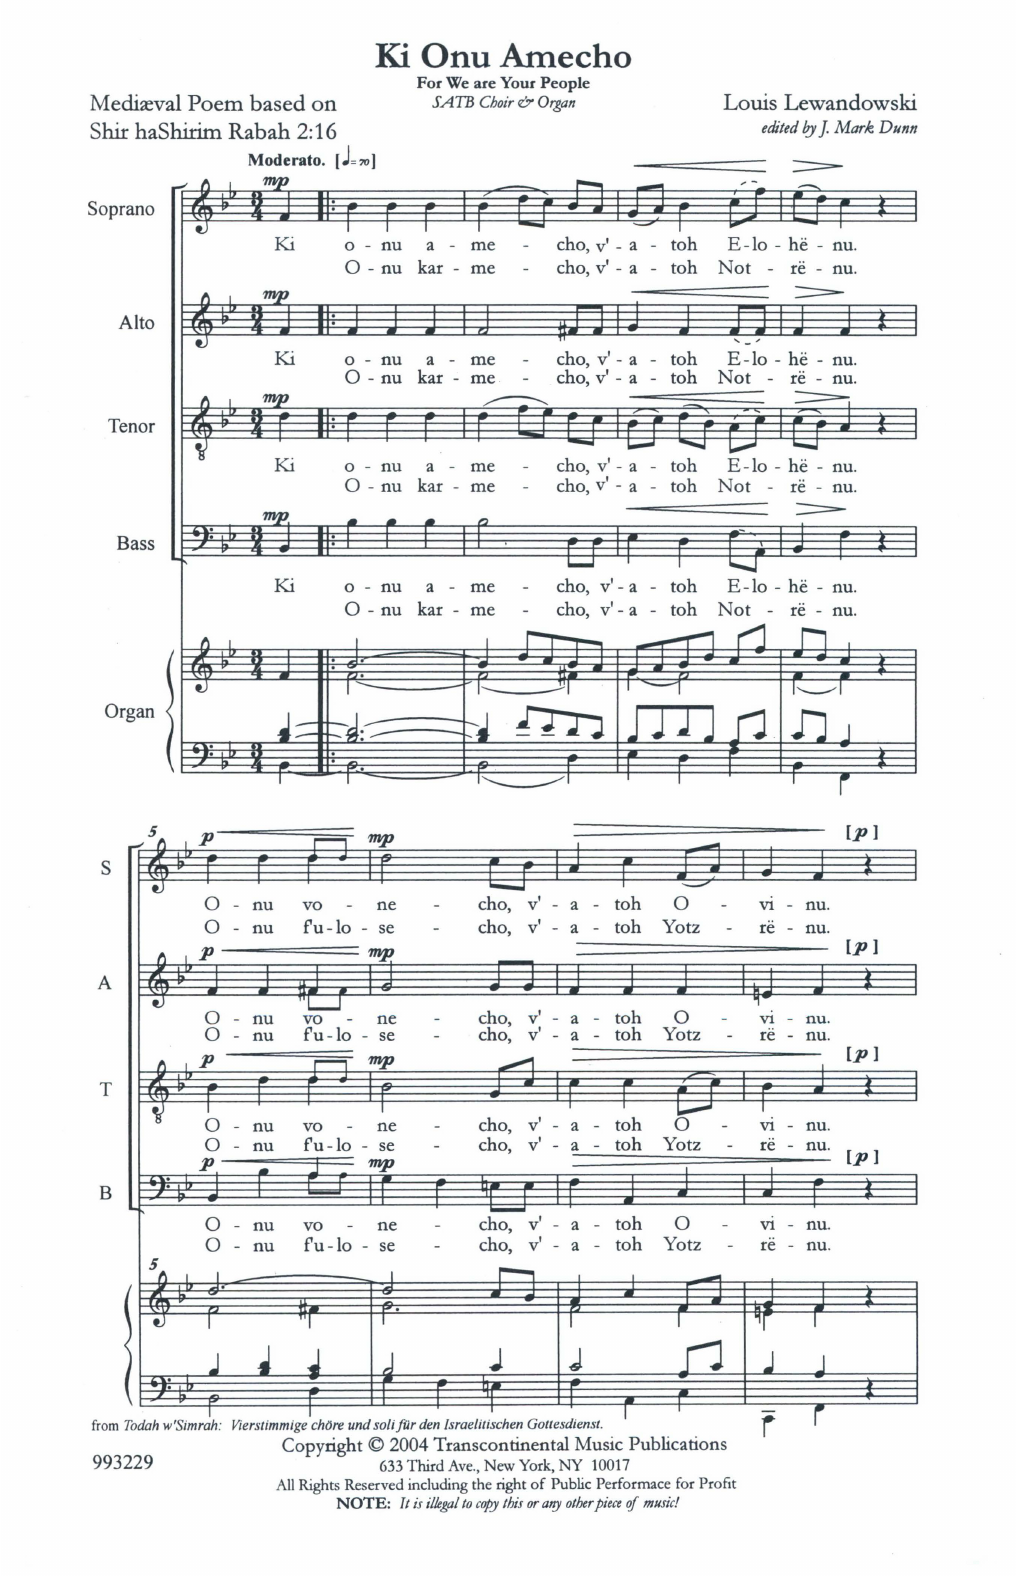 Download Louis Lewandowski Two Settings of Ki Onu Omecho Sheet Music and learn how to play SATB Choir PDF digital score in minutes